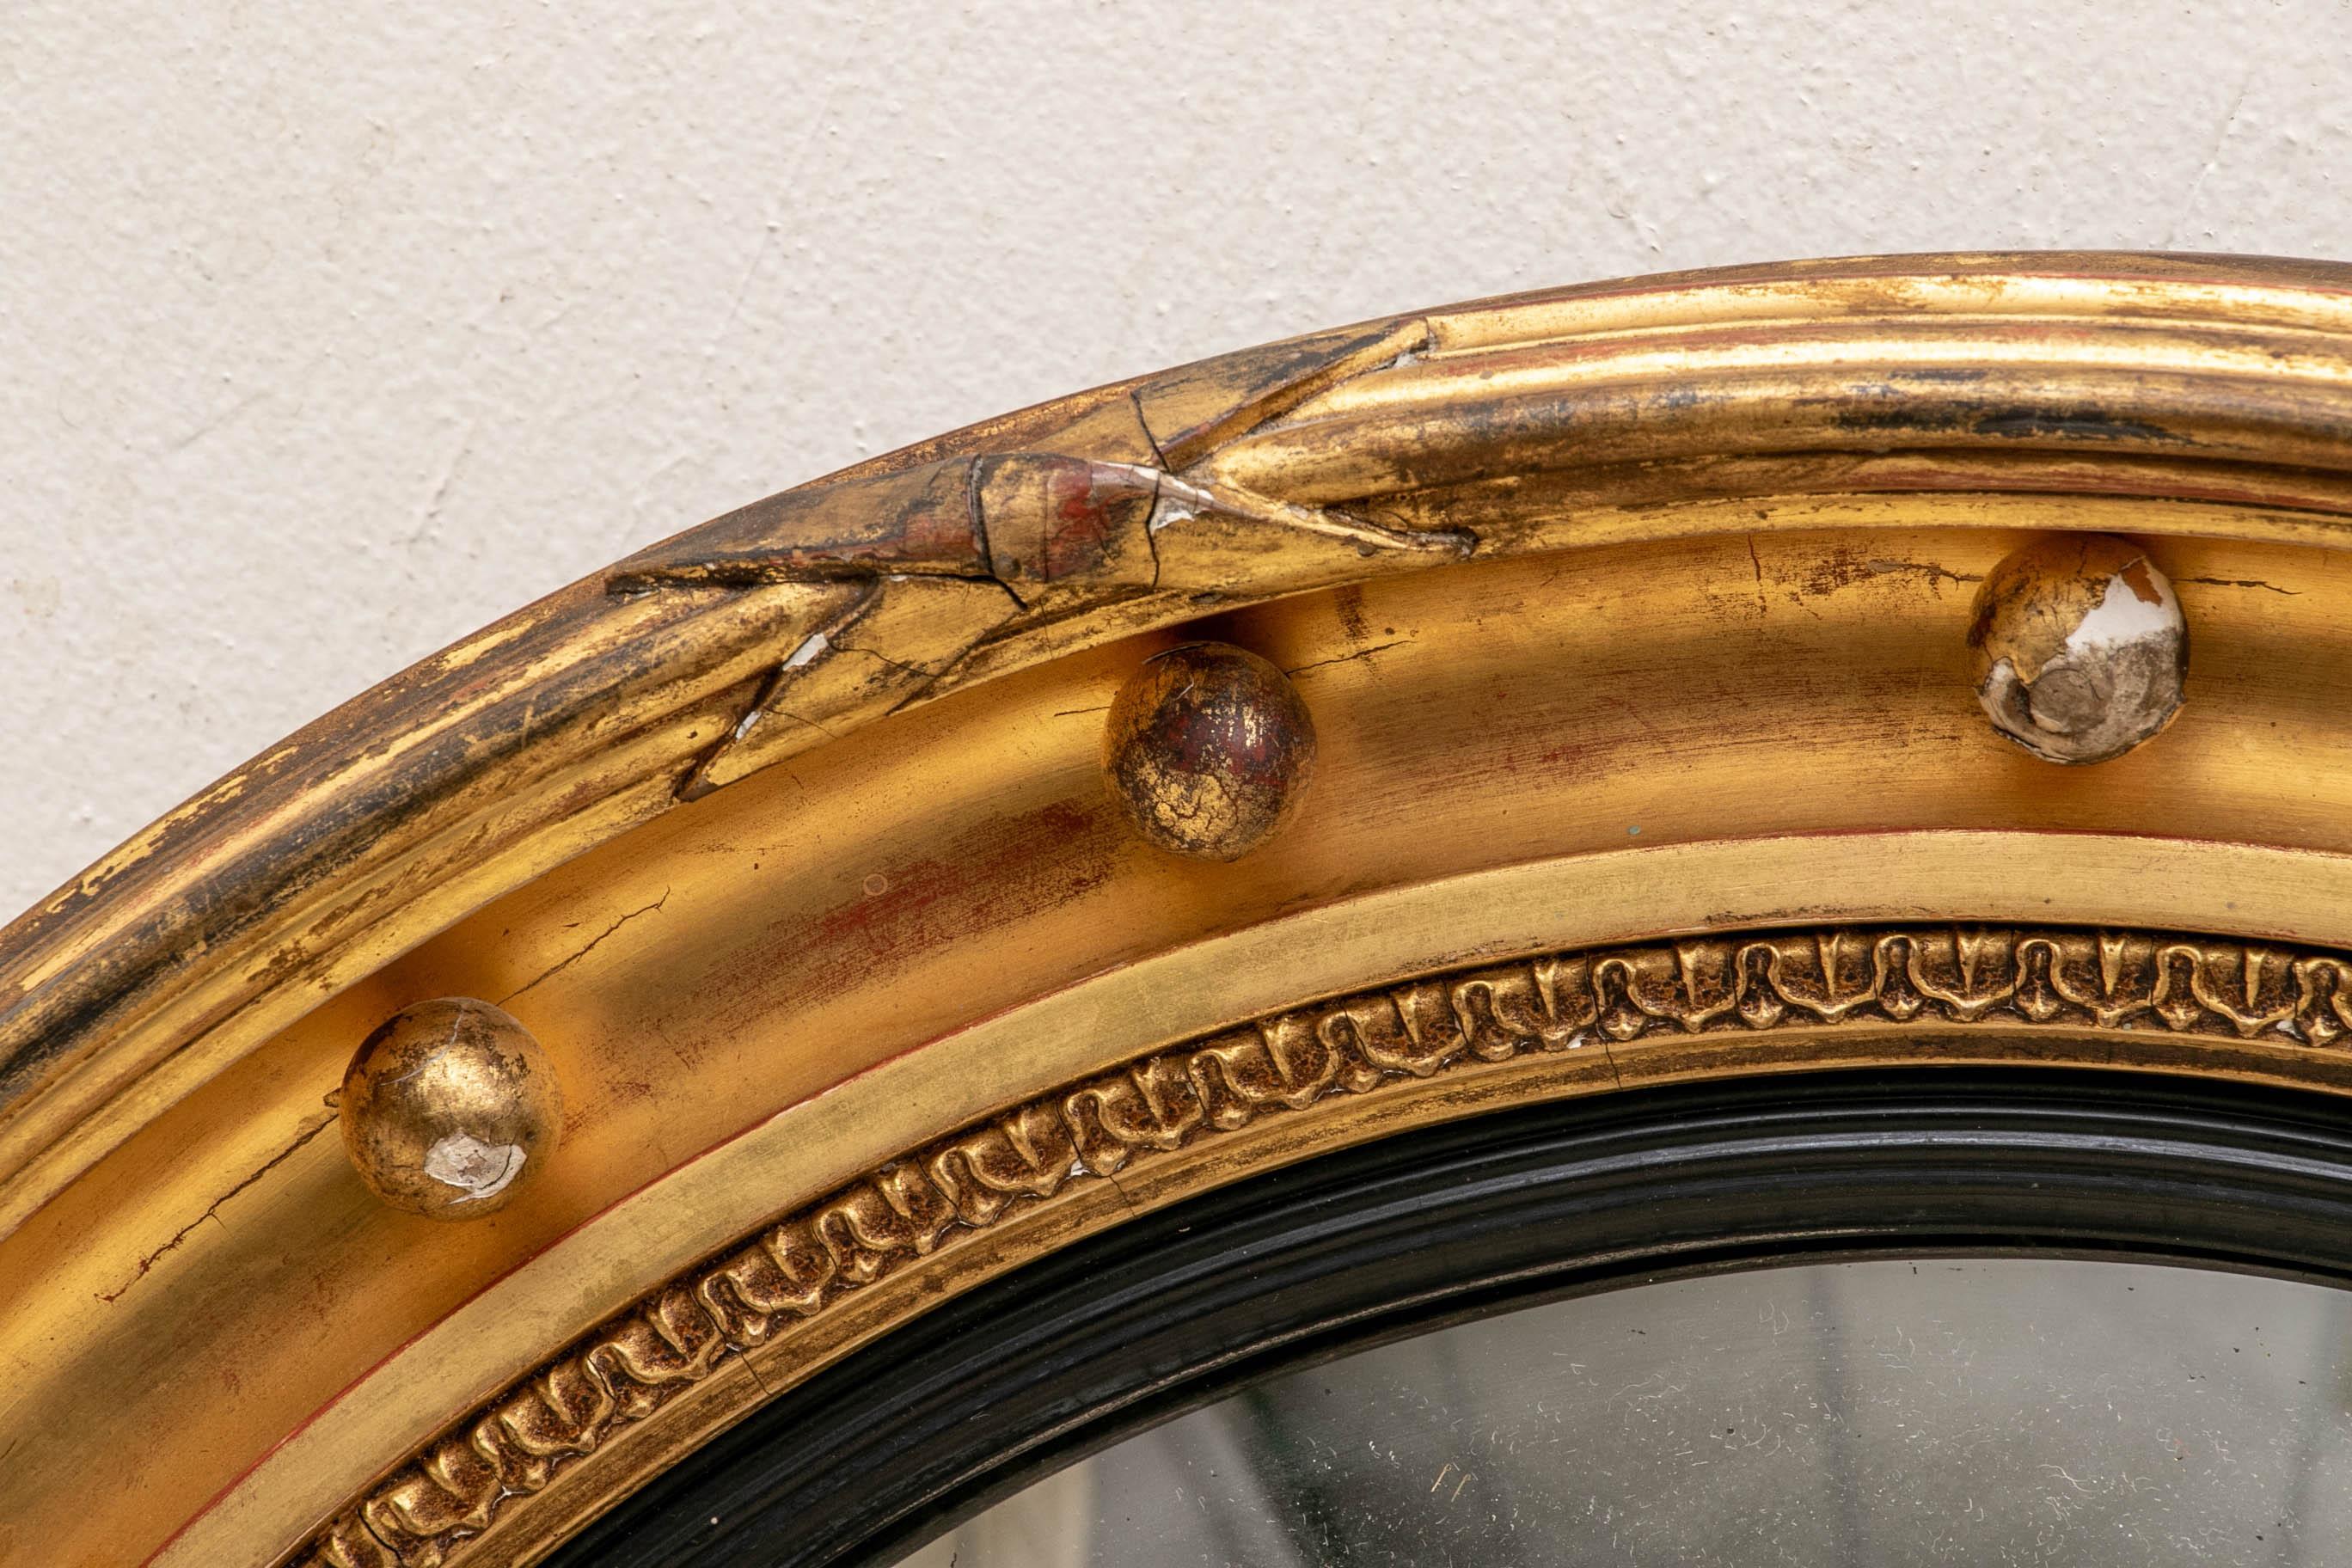 antique convex mirrors for sale